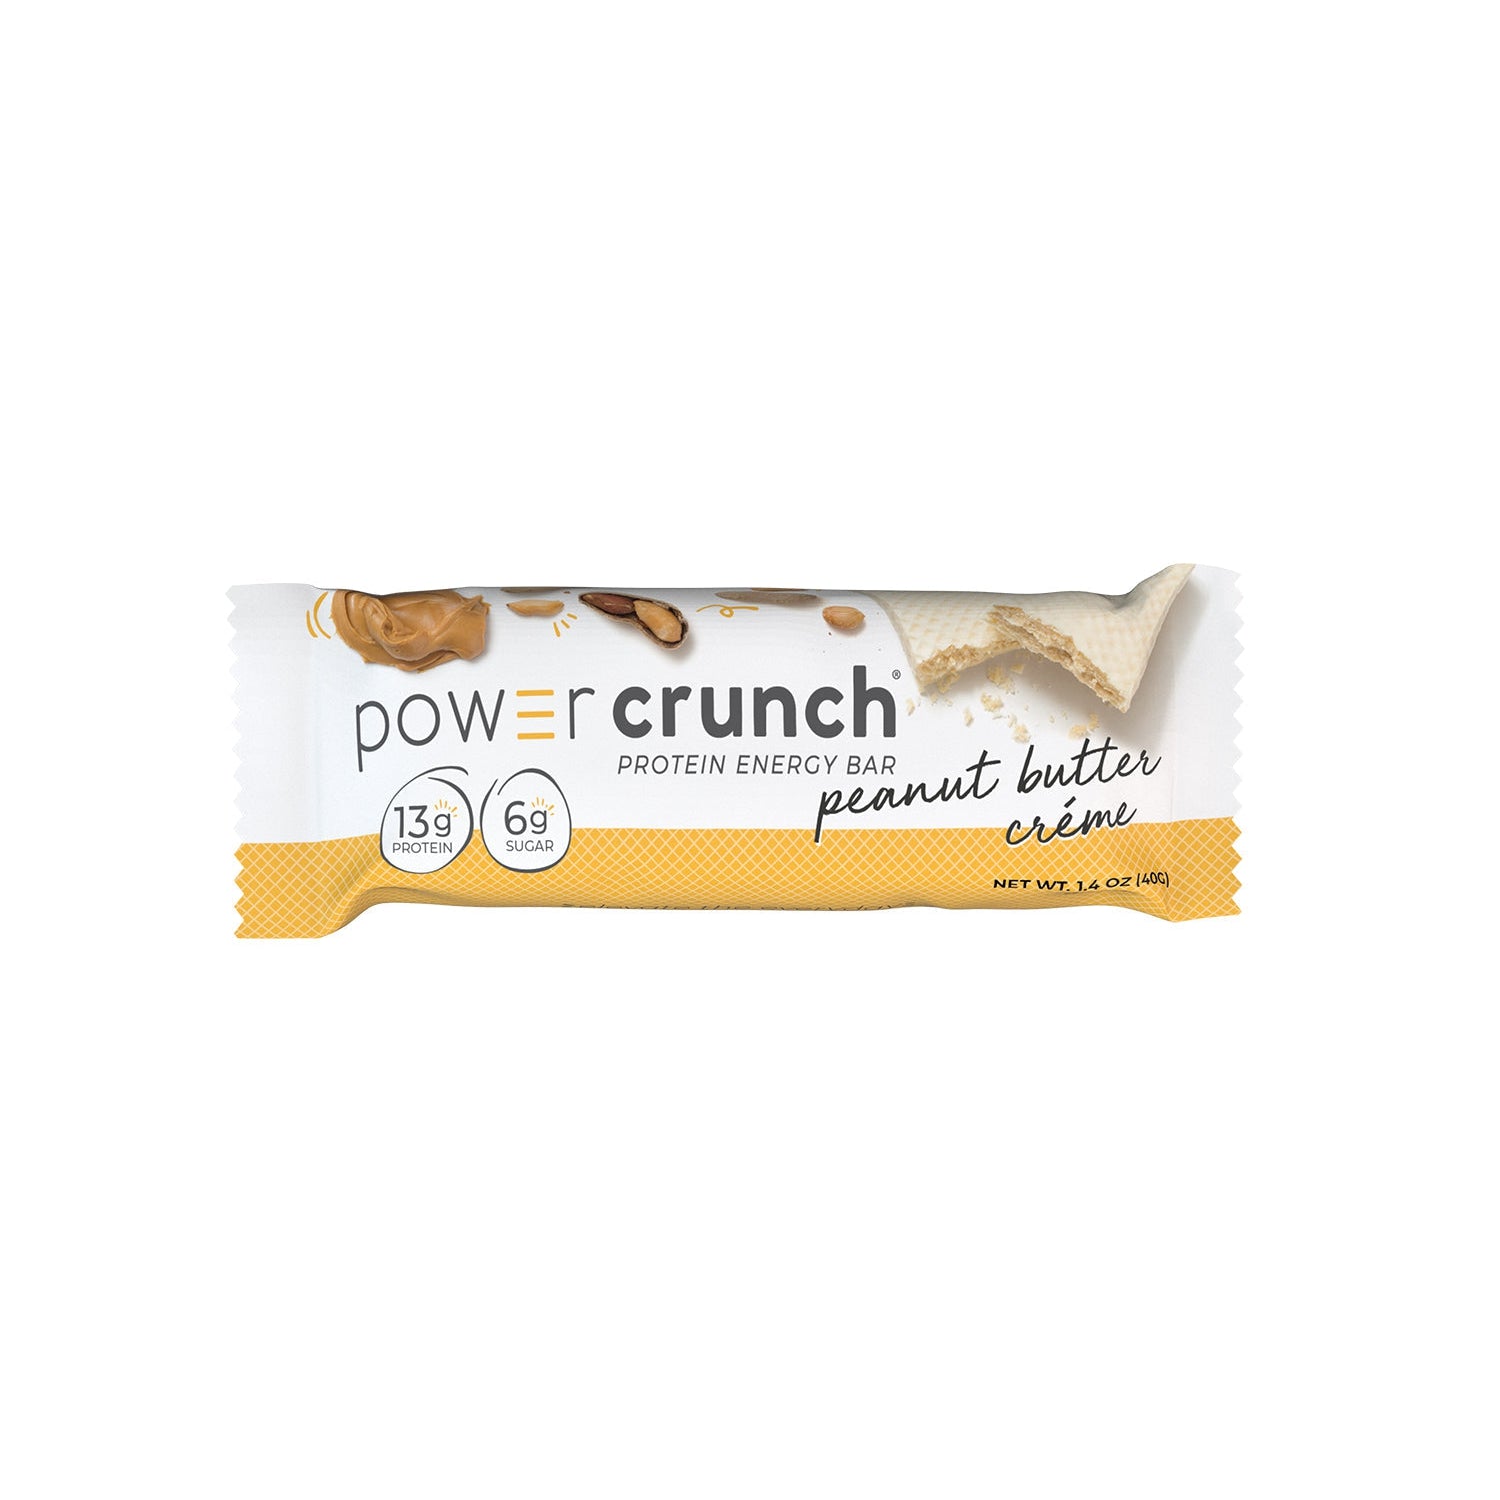 PowerCrunch Original Protein Bar